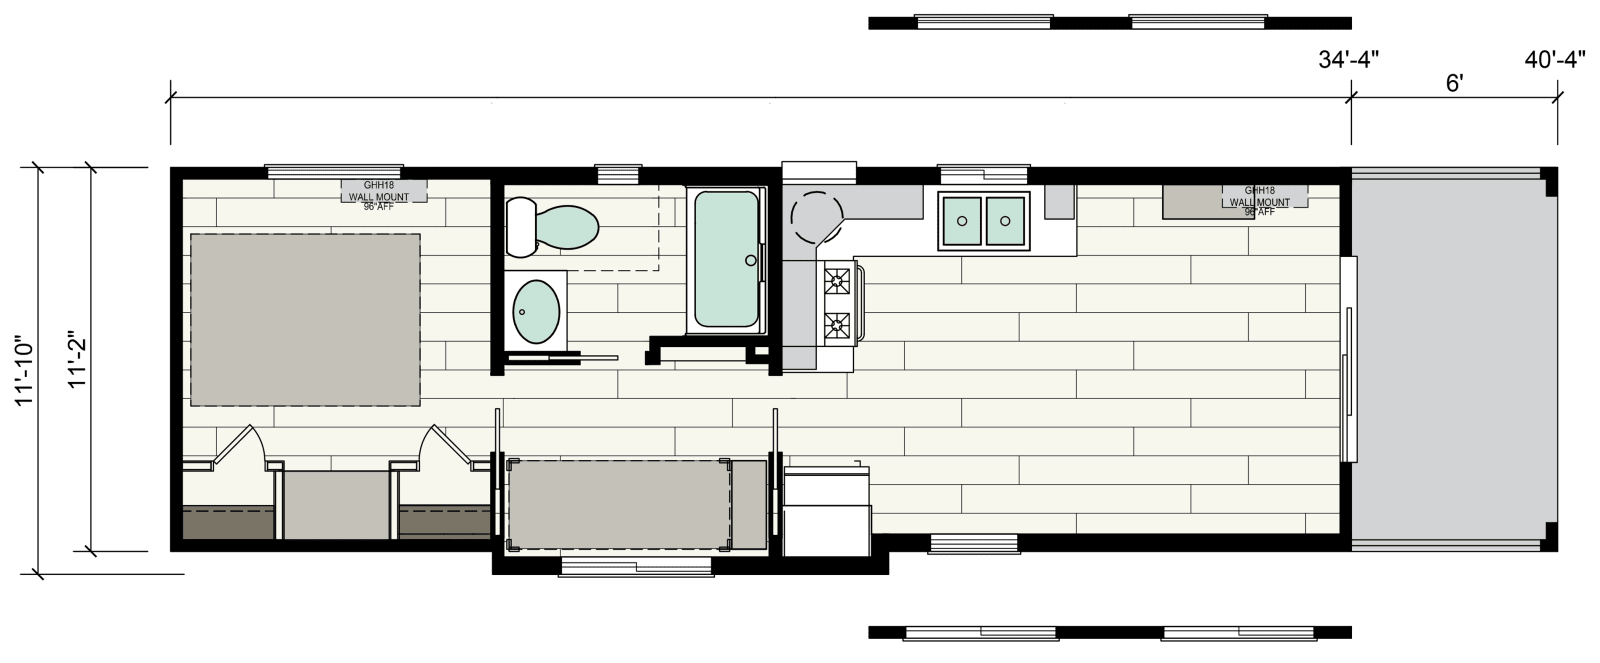 Homes Direct Modular Homes - Model APH510 - Floorplan